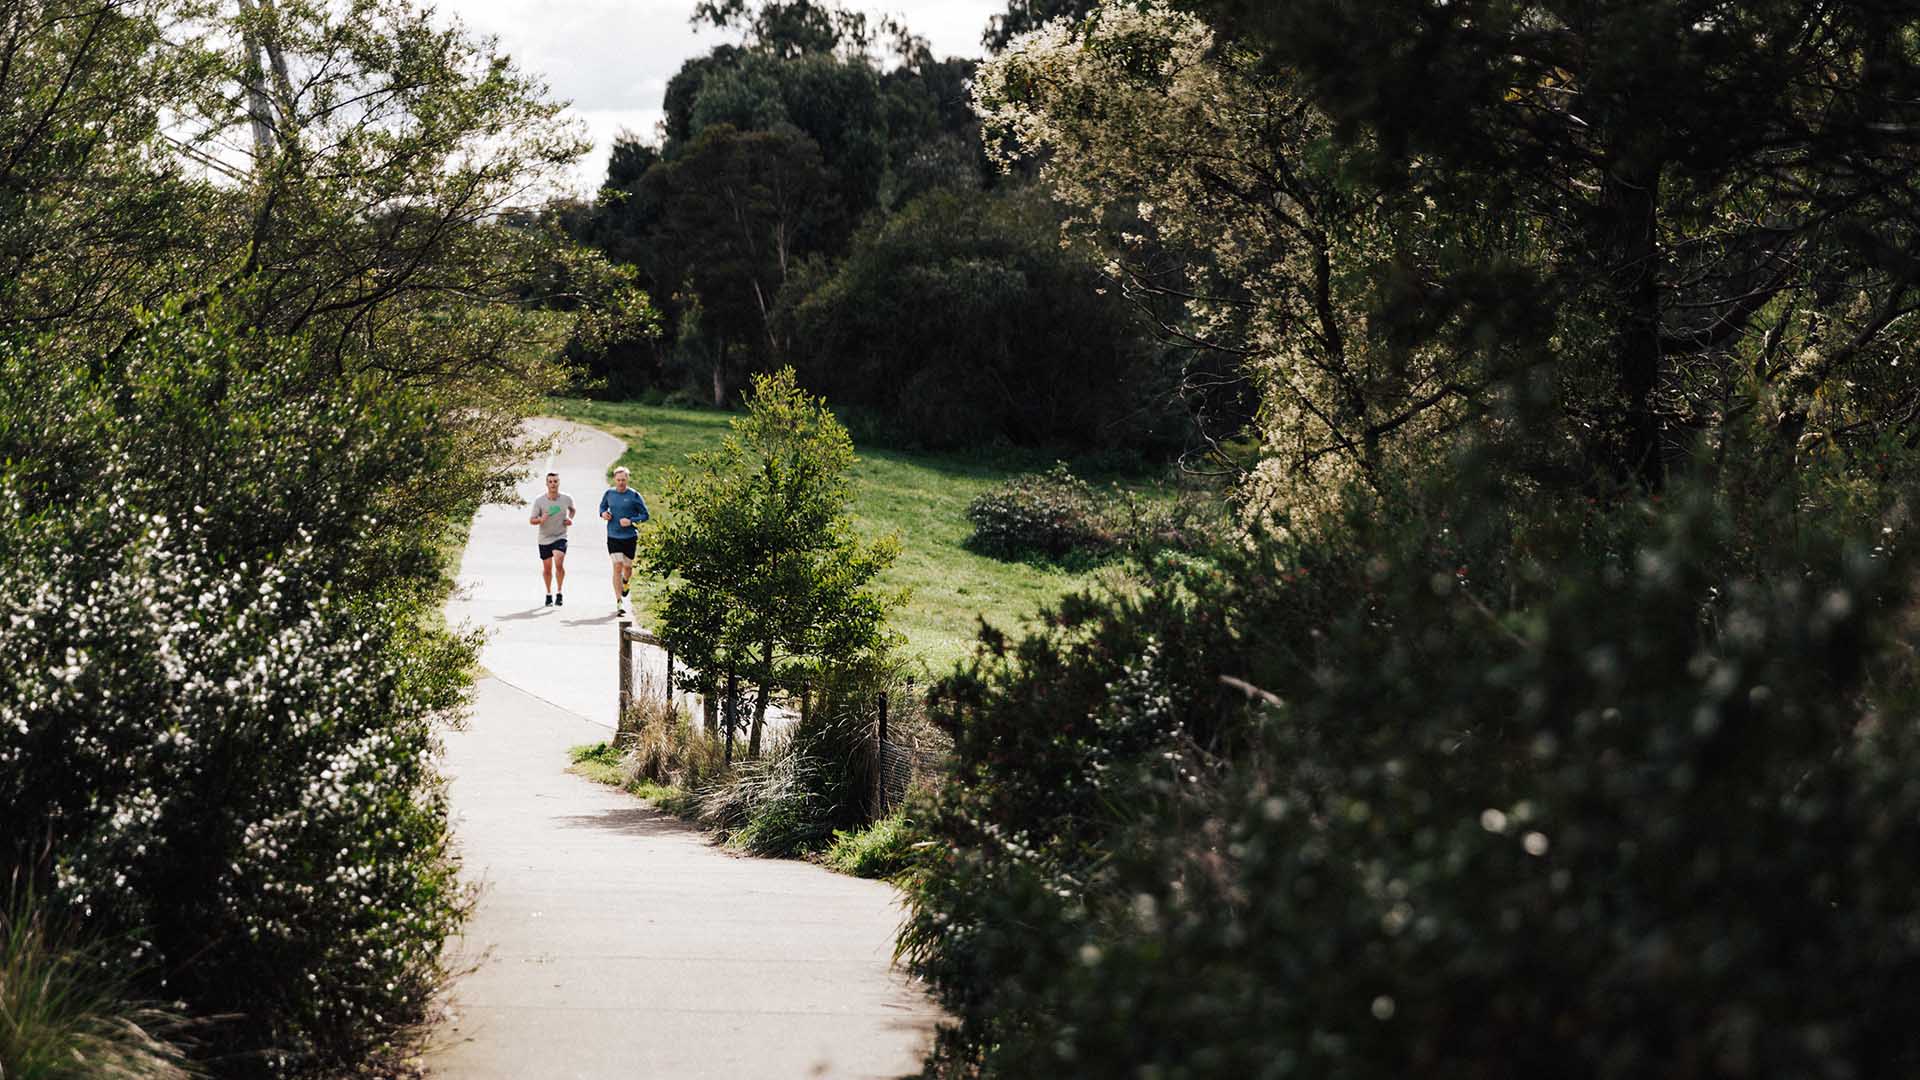 Merri Creek Trail - one of the best walks in Melbourne.